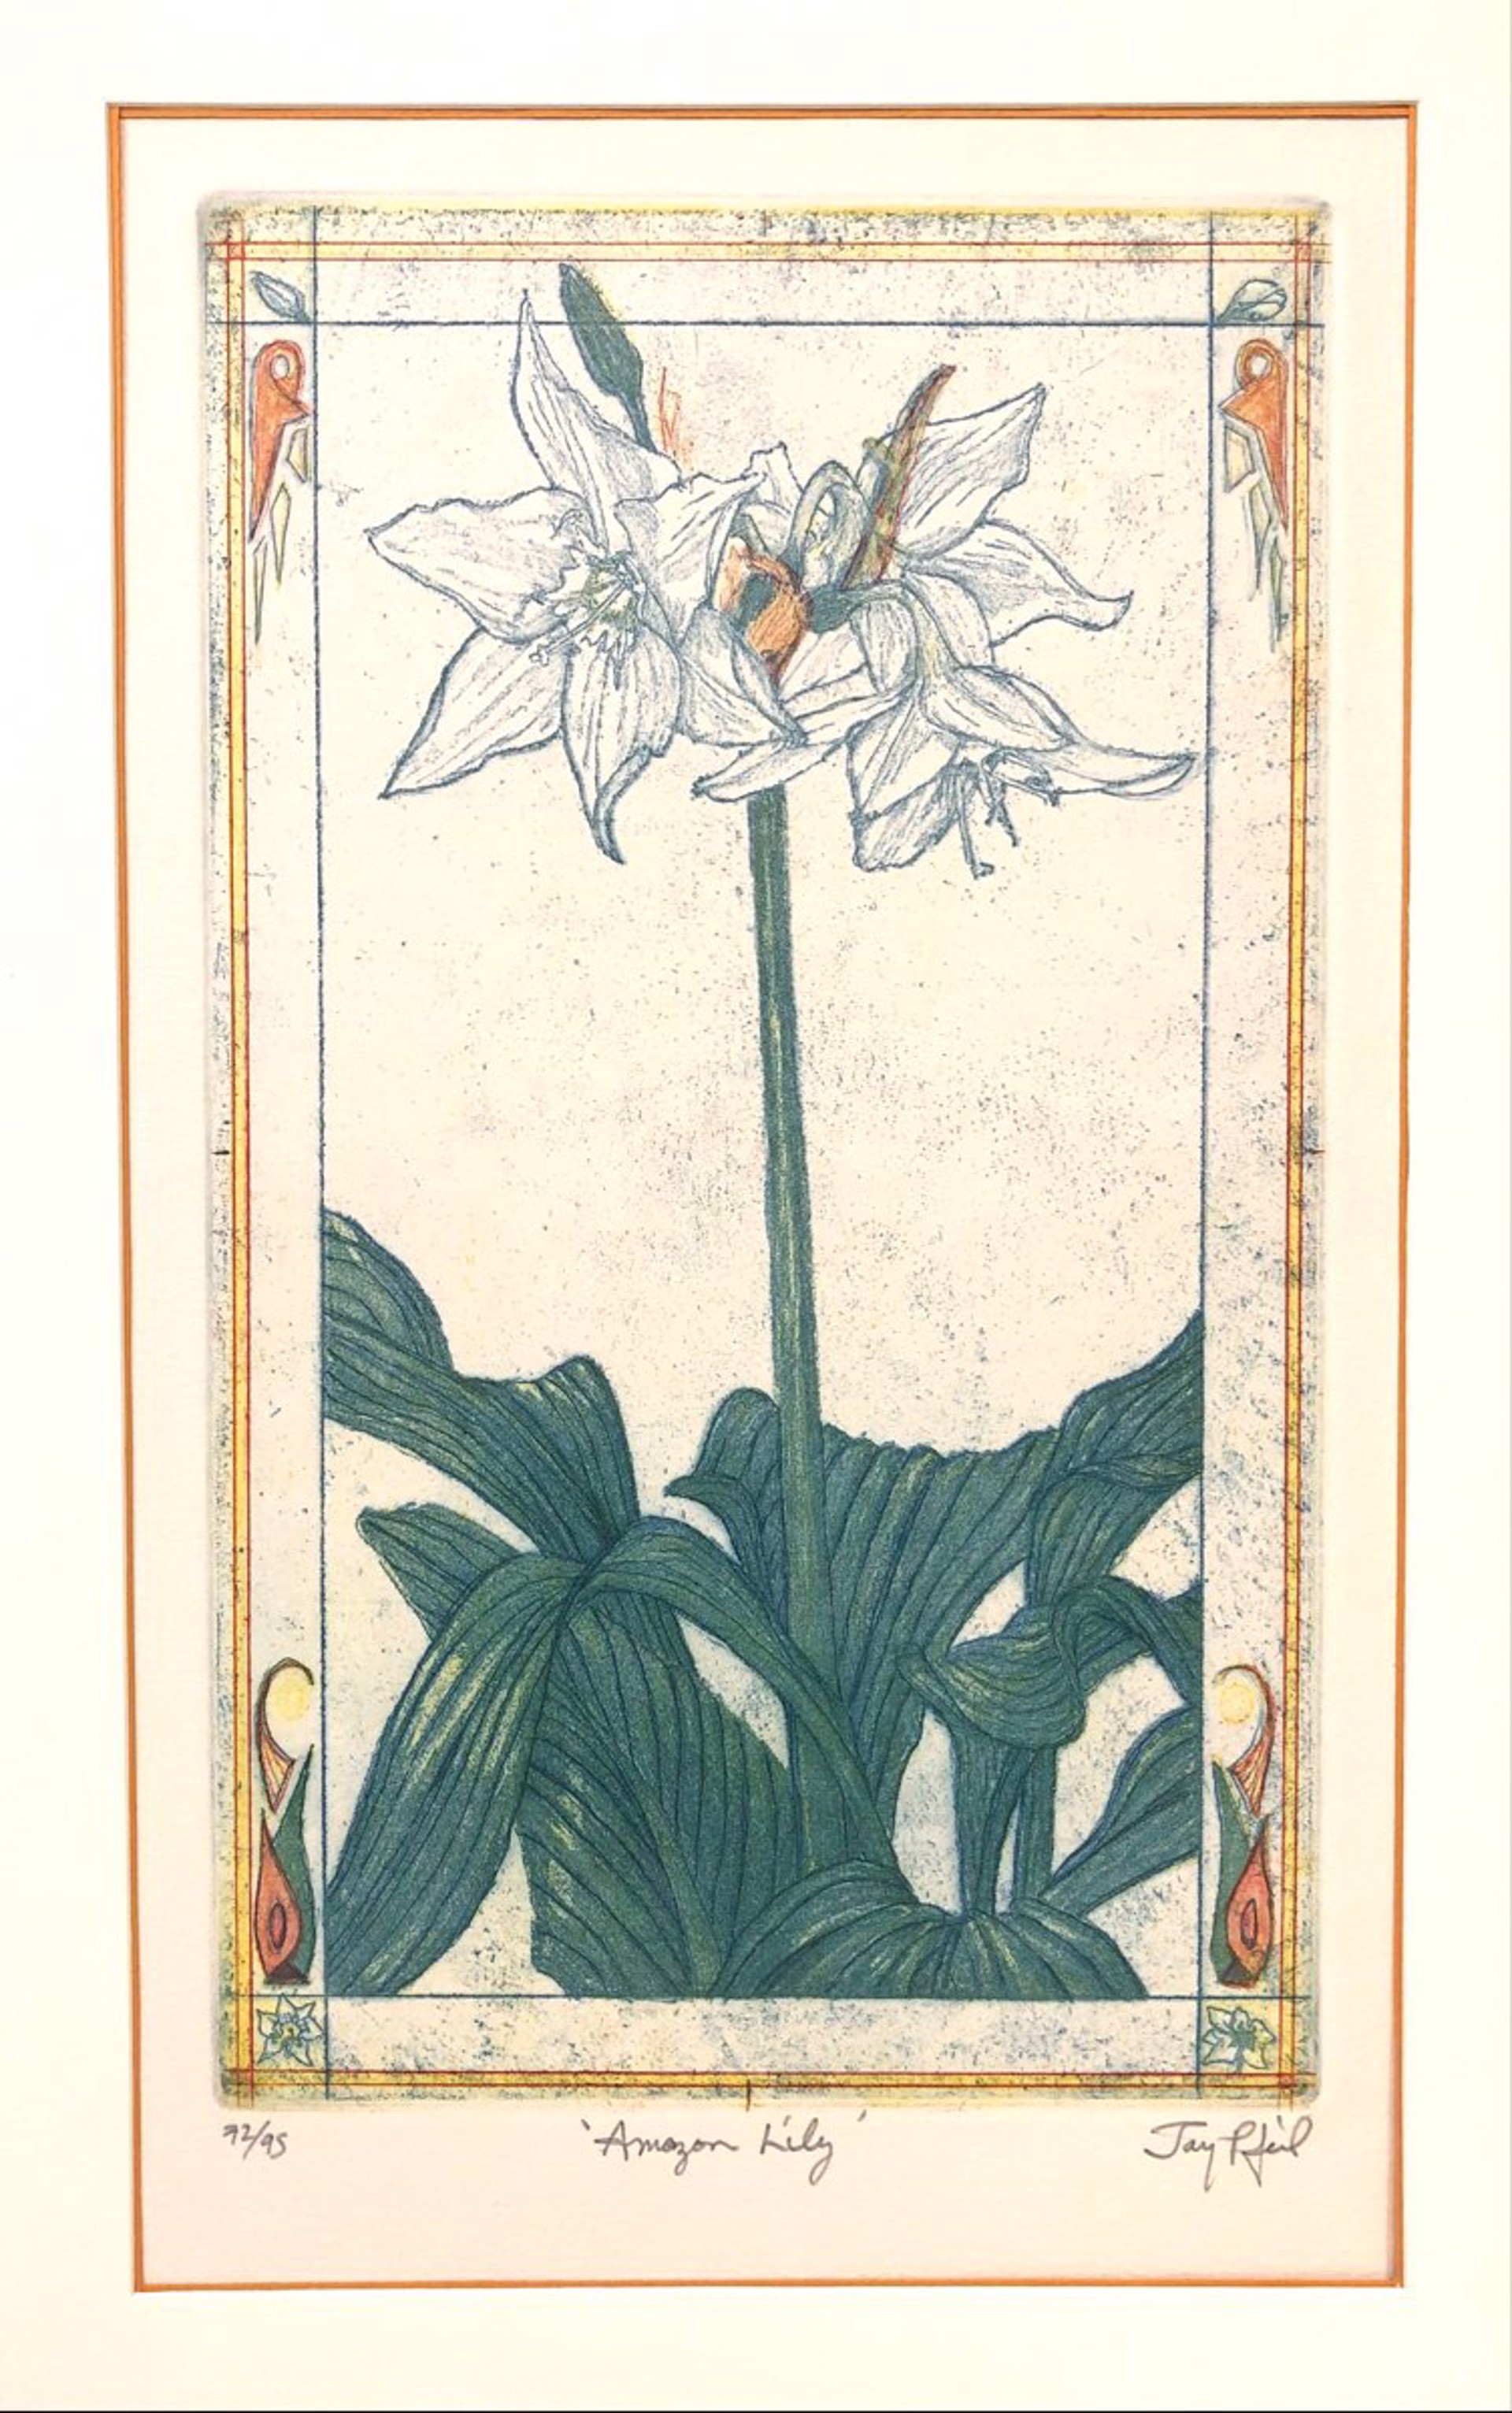 Amazon Lily (Unframed) by Jay Pfeil